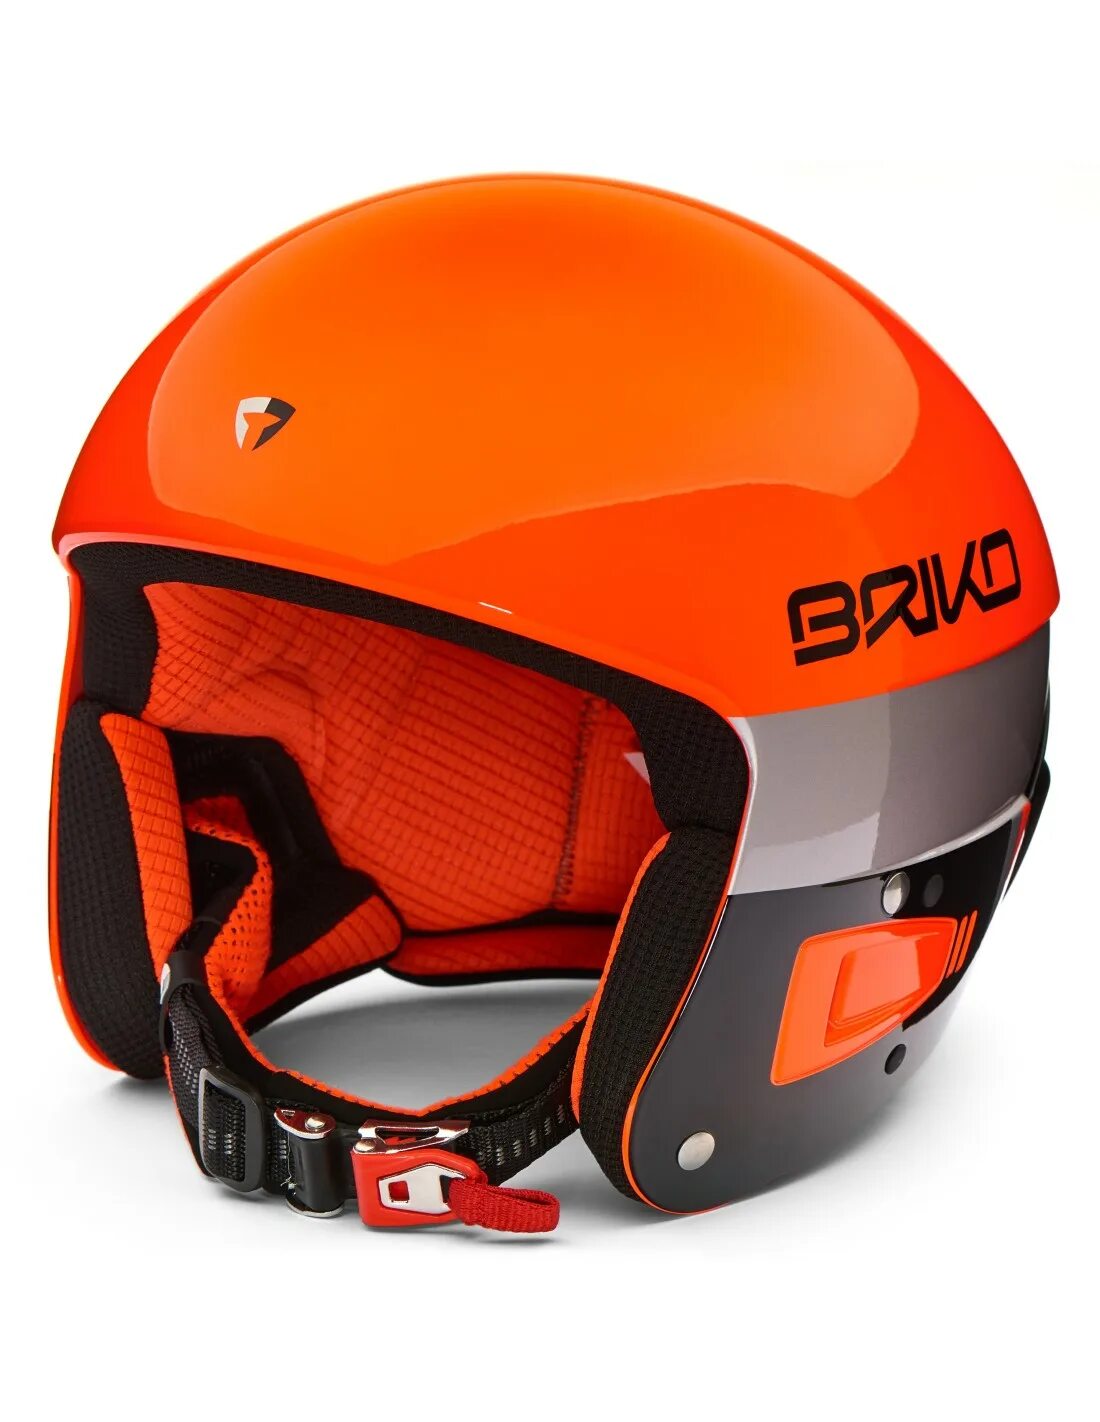 Шлем Briko Vulcano Fis 6.8. Шлем Uvex горнолыжный Fis. Briko Helmet Size. Шлем горнолыжный Briko детский s. Купить горнолыжный шлем в москве